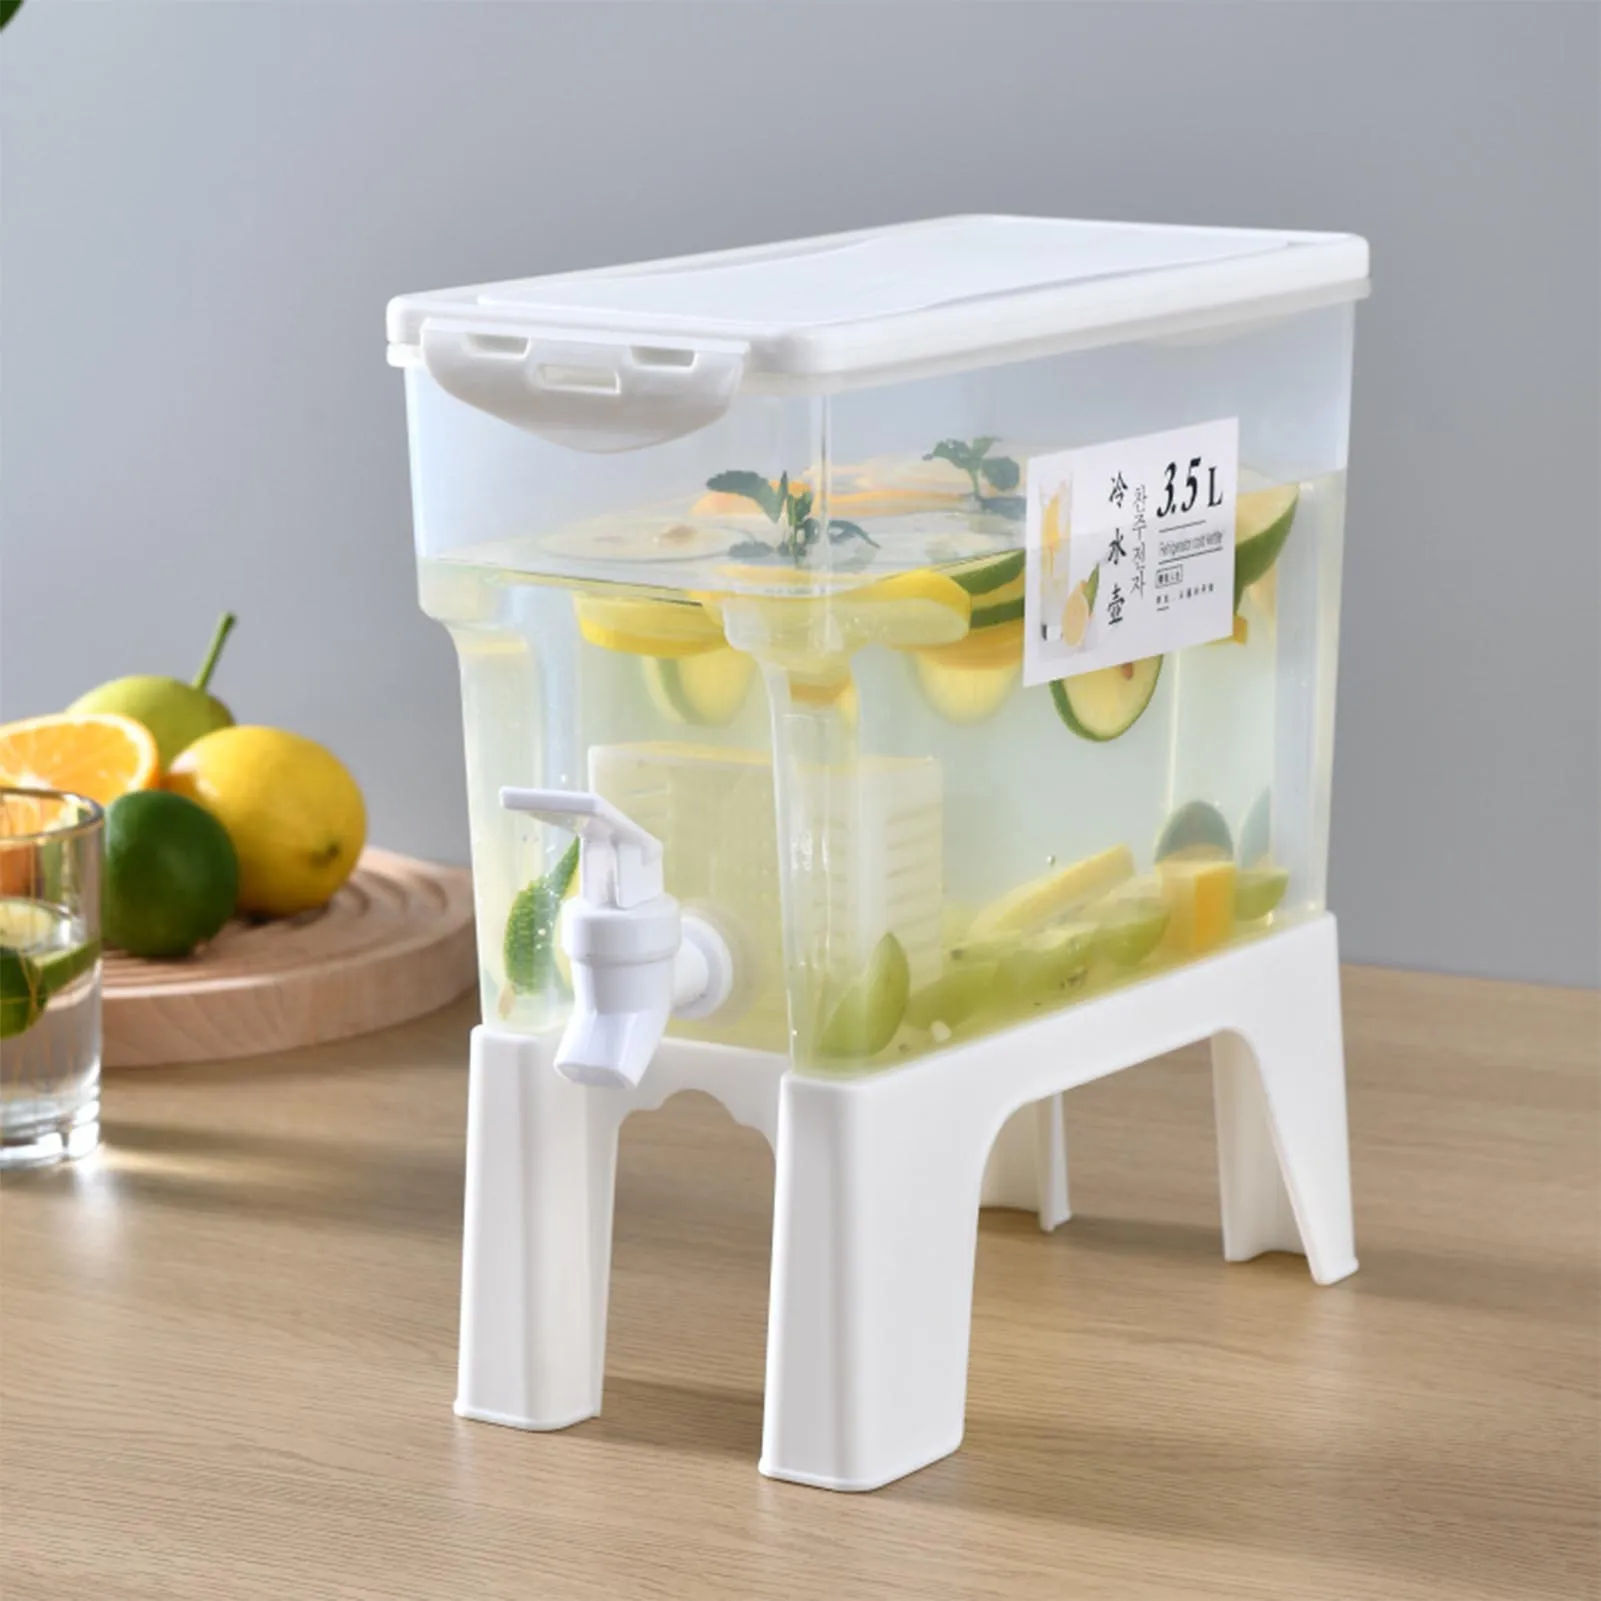 

Drink Dispenser With Removable Stand Fridge Beverage Dispenser With Spigot Water Jug Cold Kettle Milk Lemonade Juice Container